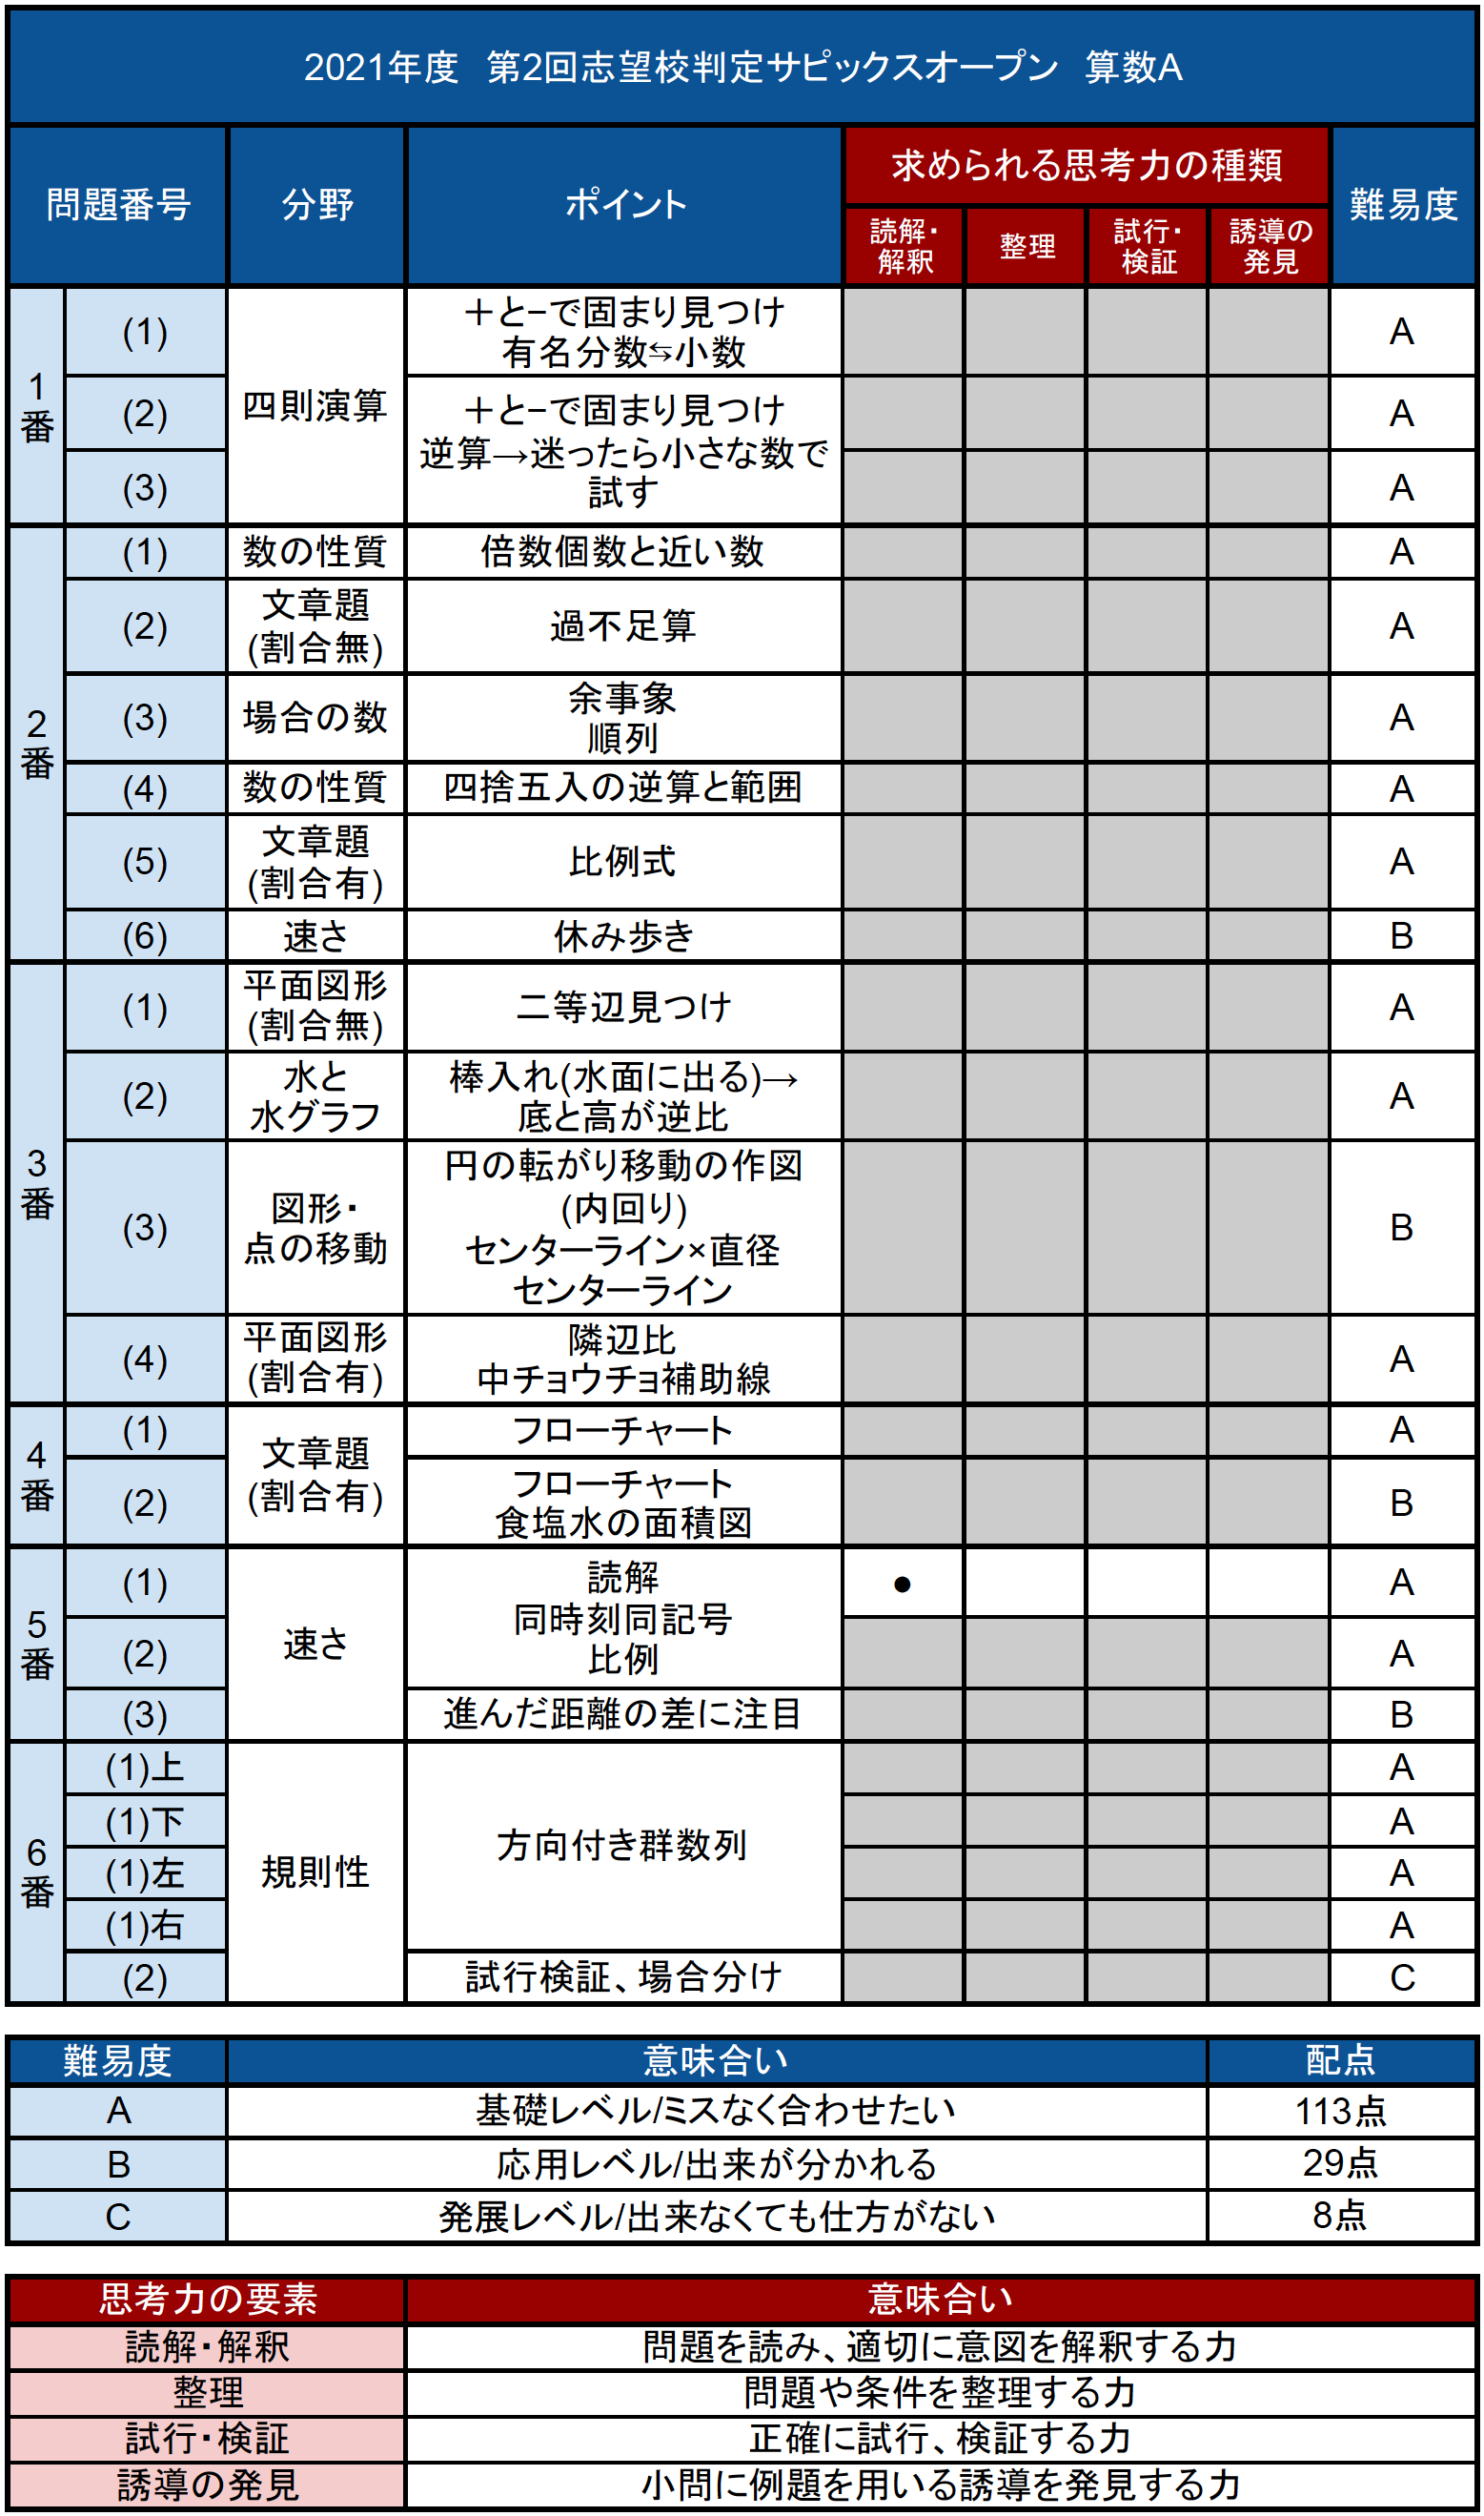 UX12-027 SAPIX 小6 第1/2回 志望校判定サピックスオープン 2022年4/6